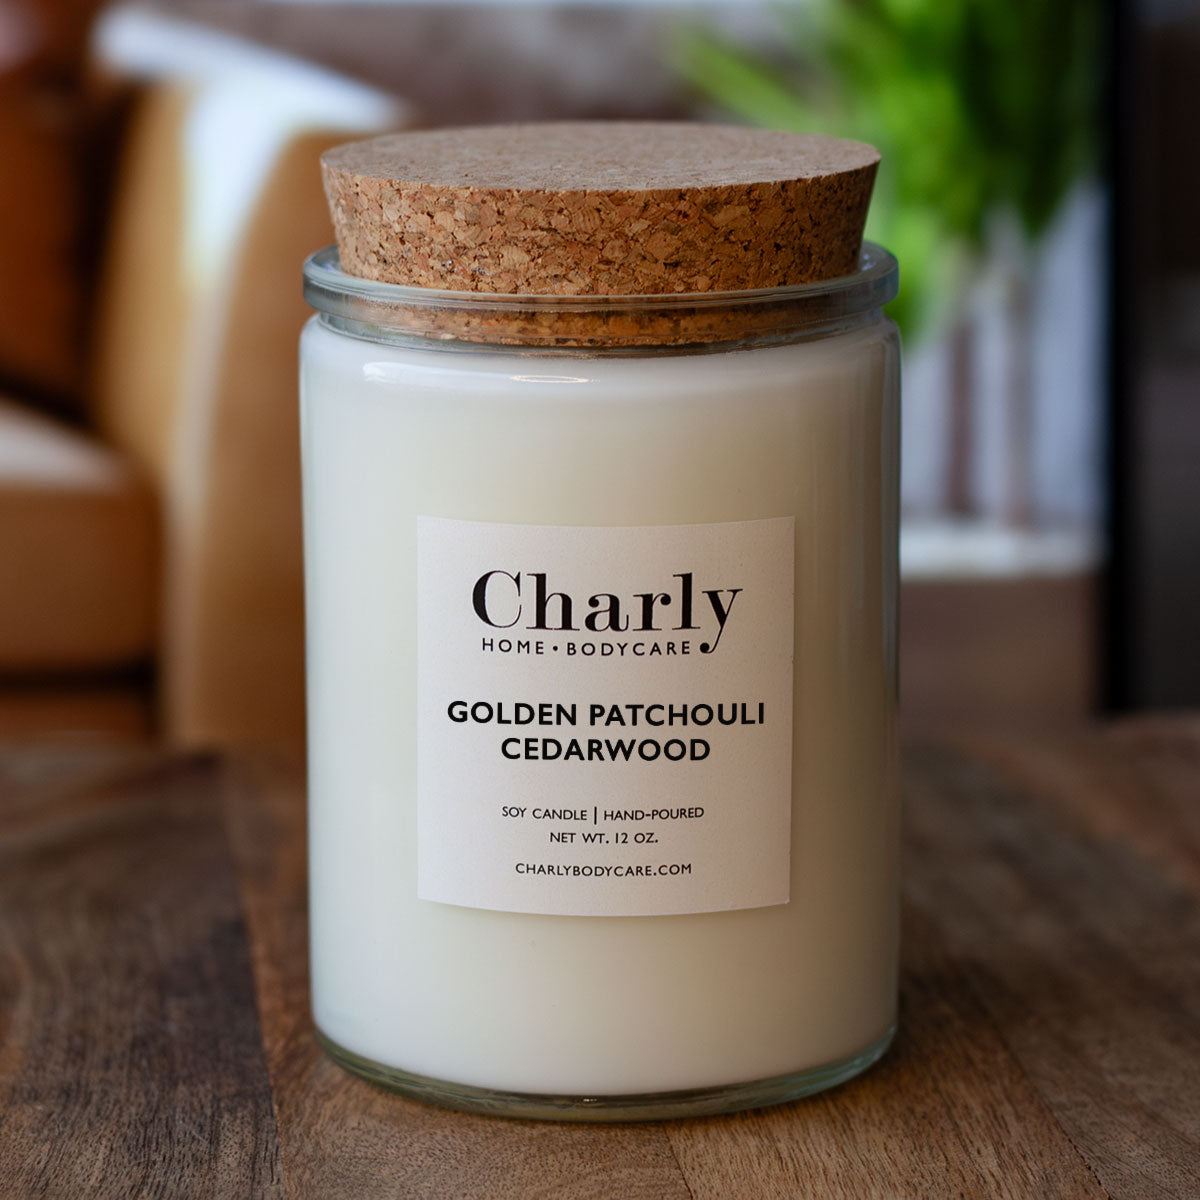 Golden Patchouli Cedarwood Soy Candle